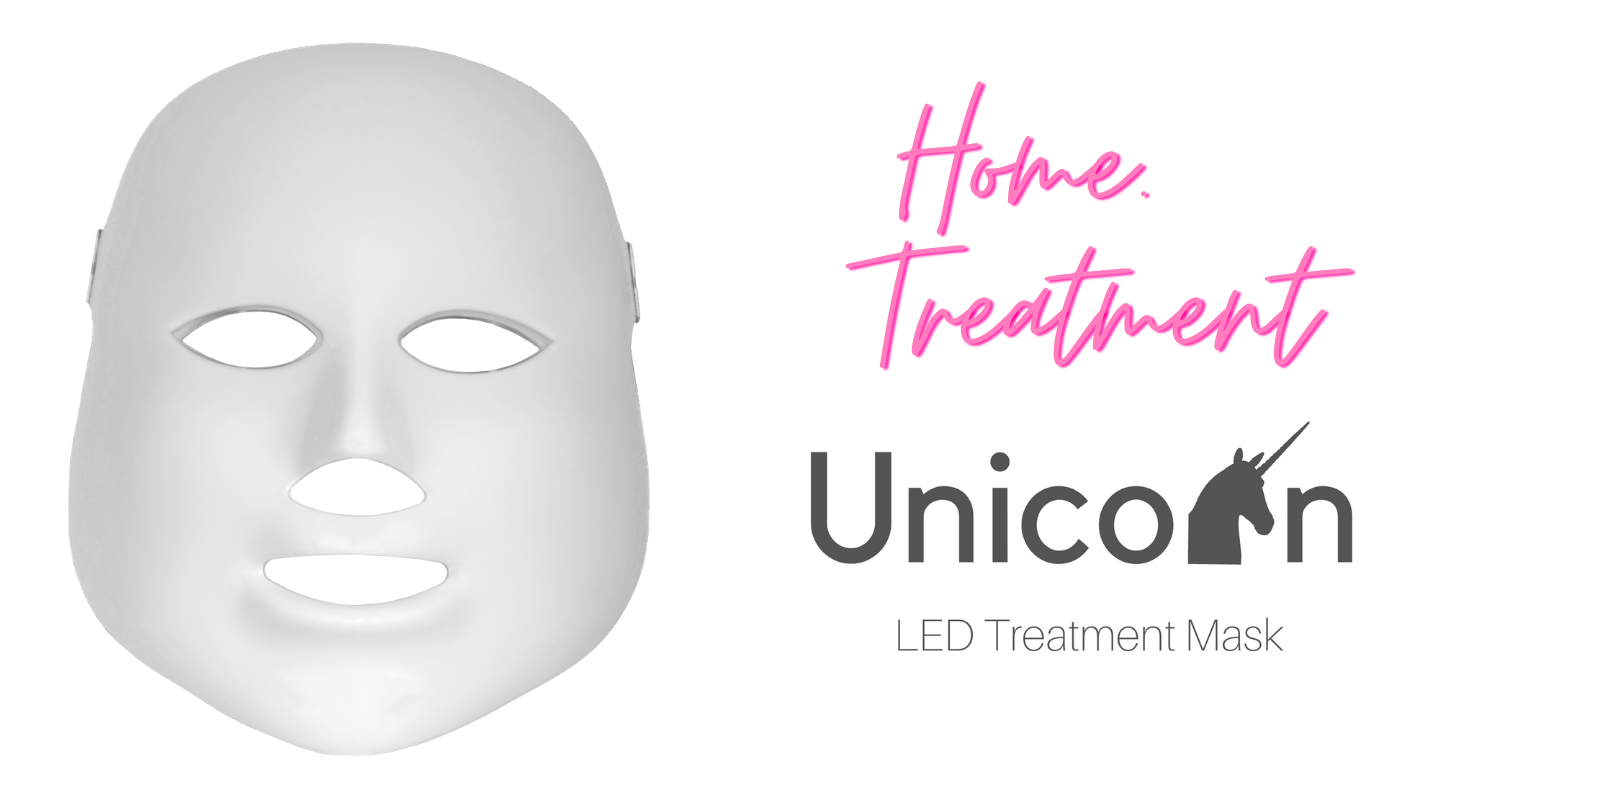 LED photo-rejuvenation treatment at home. Skin care at home. Cold Laser at home.